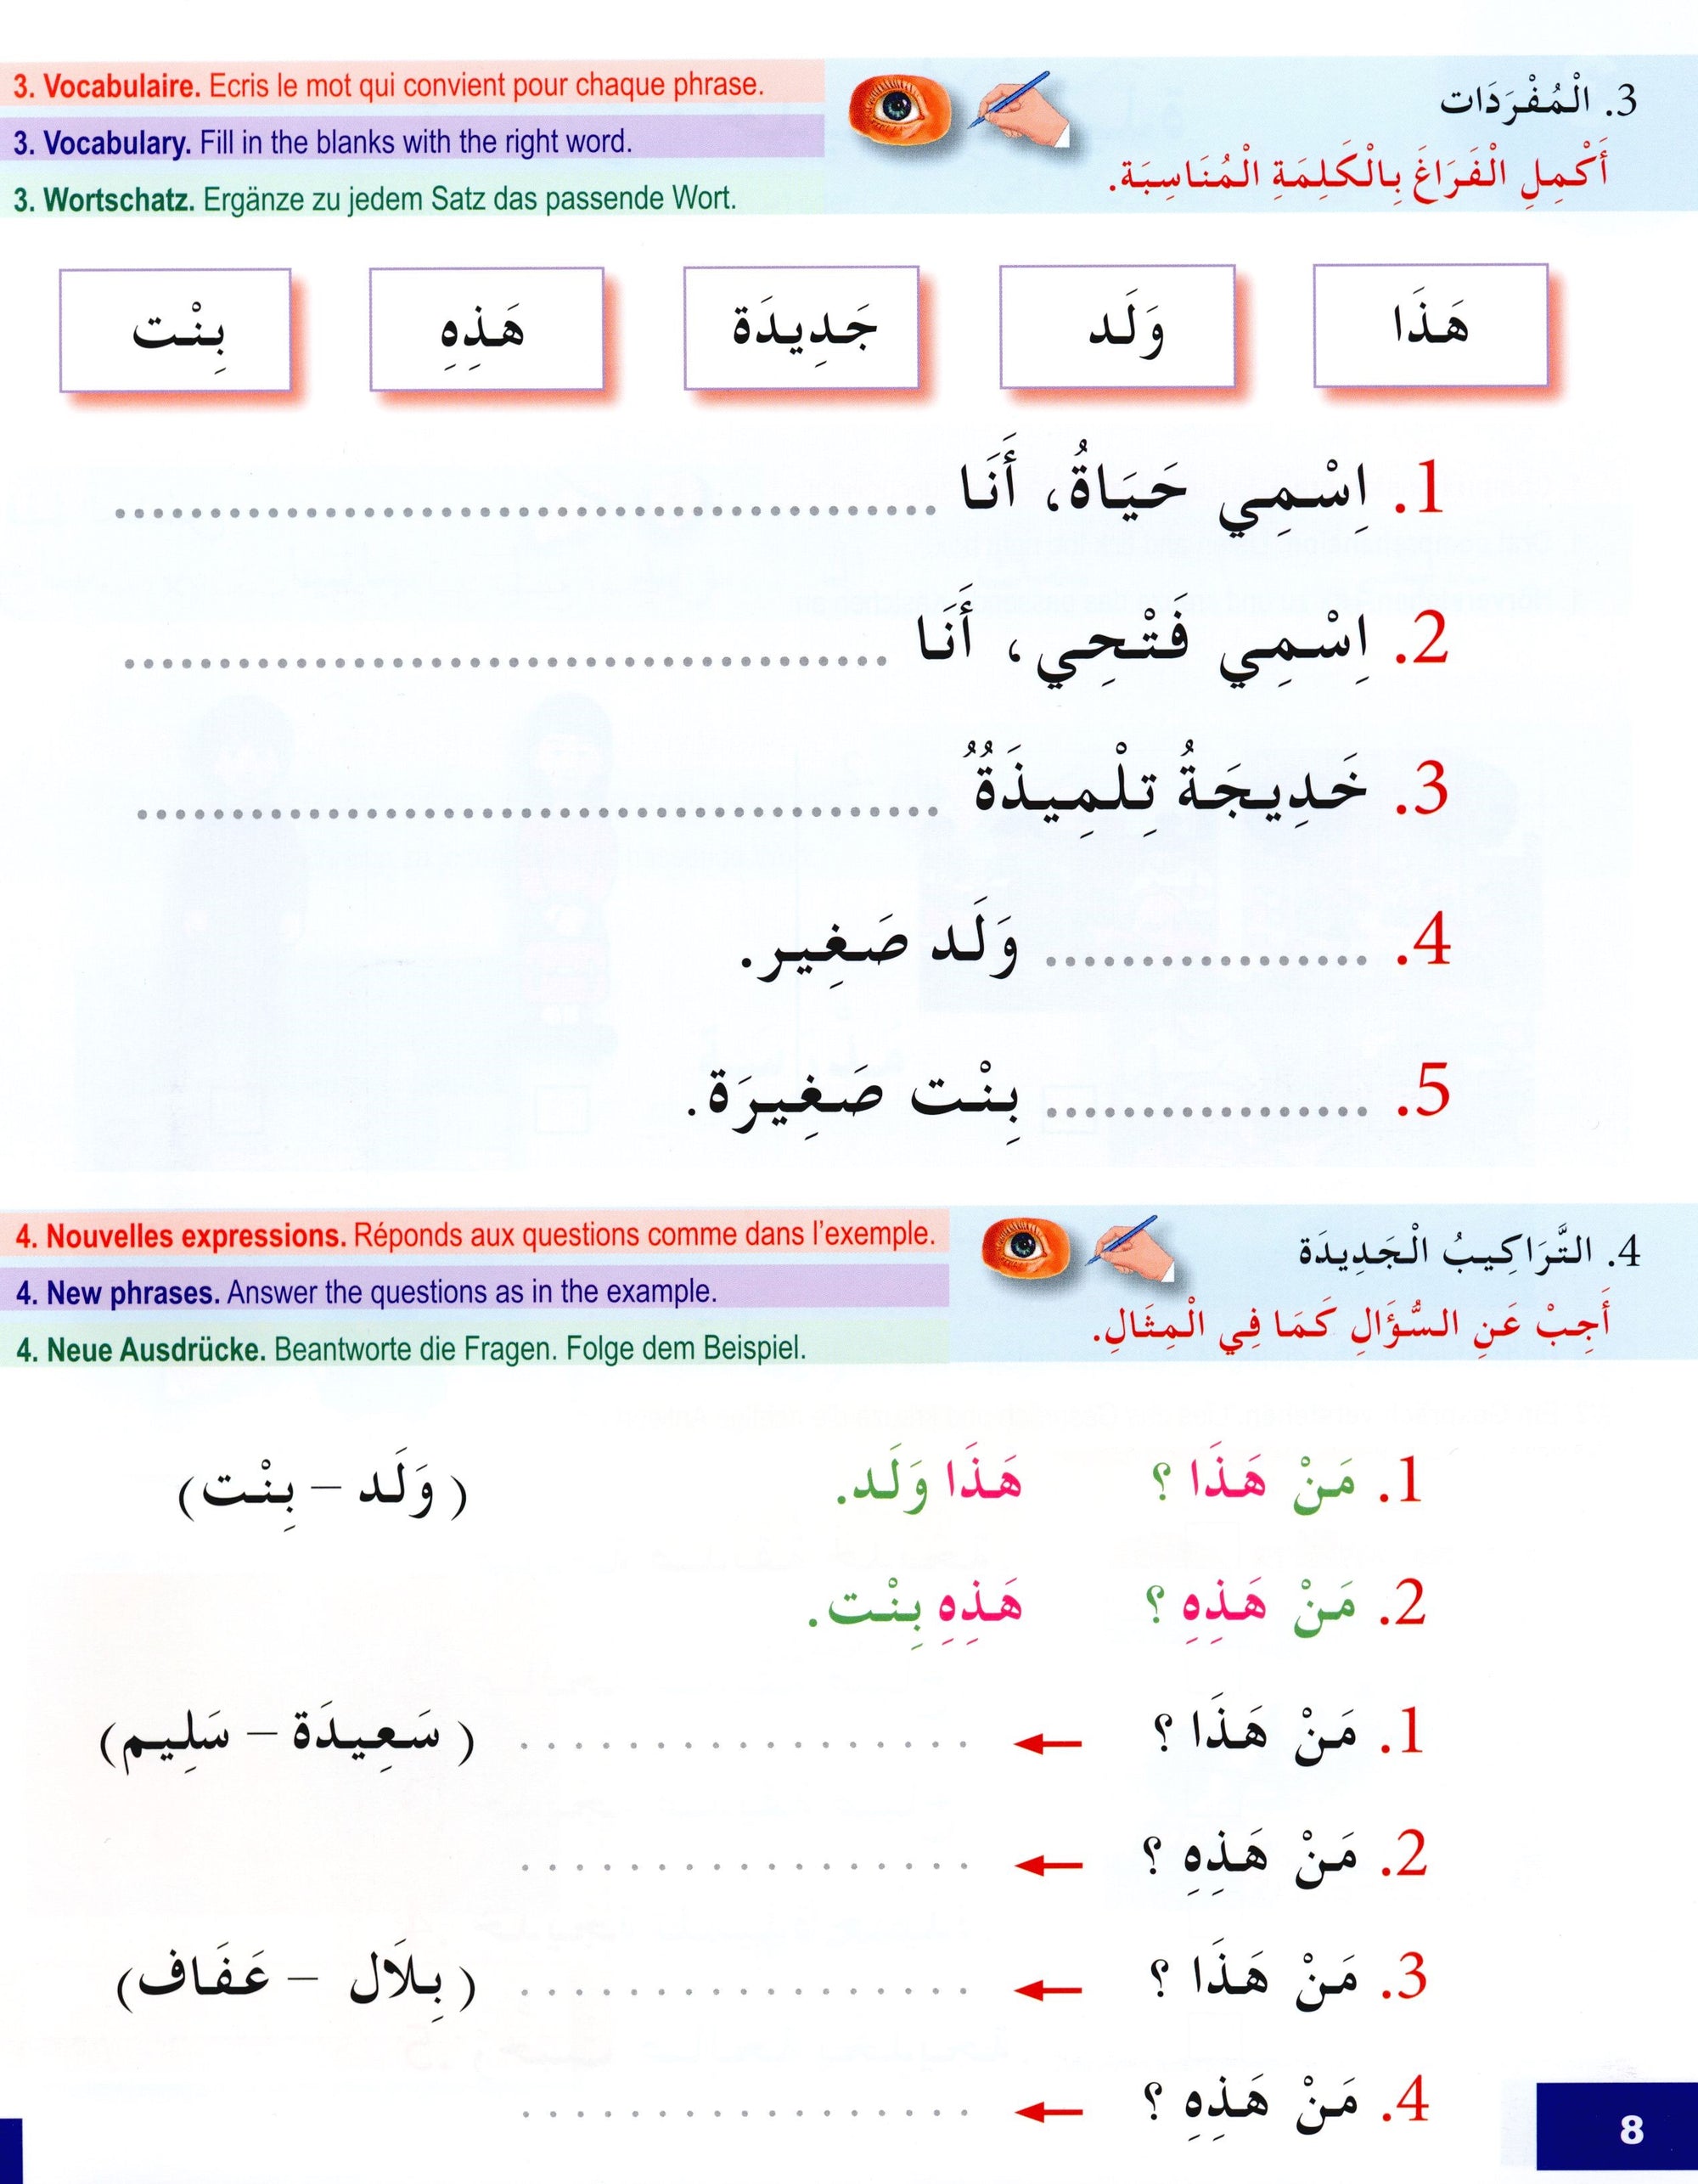 I Learn Arabic Simplified Multi Languages Curriculum Workbook Level 2 أتعلم العربية المنهج الميسر متعدد اللغات كتاب التمارين